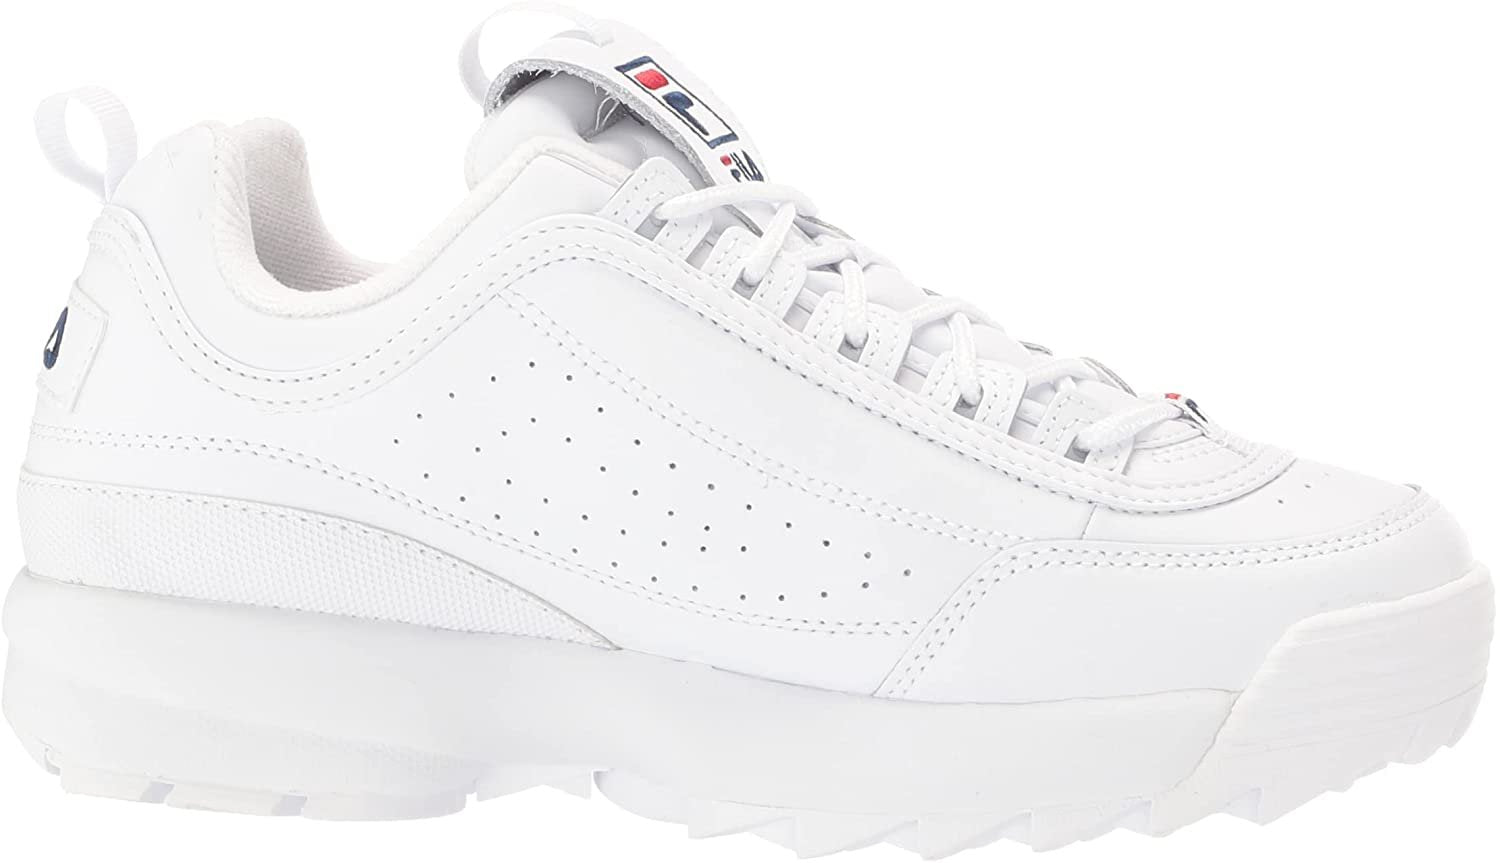 Fila womens Fila Women's Disruptor Ii Premium Sneaker, White/Navy/Red, 8 US